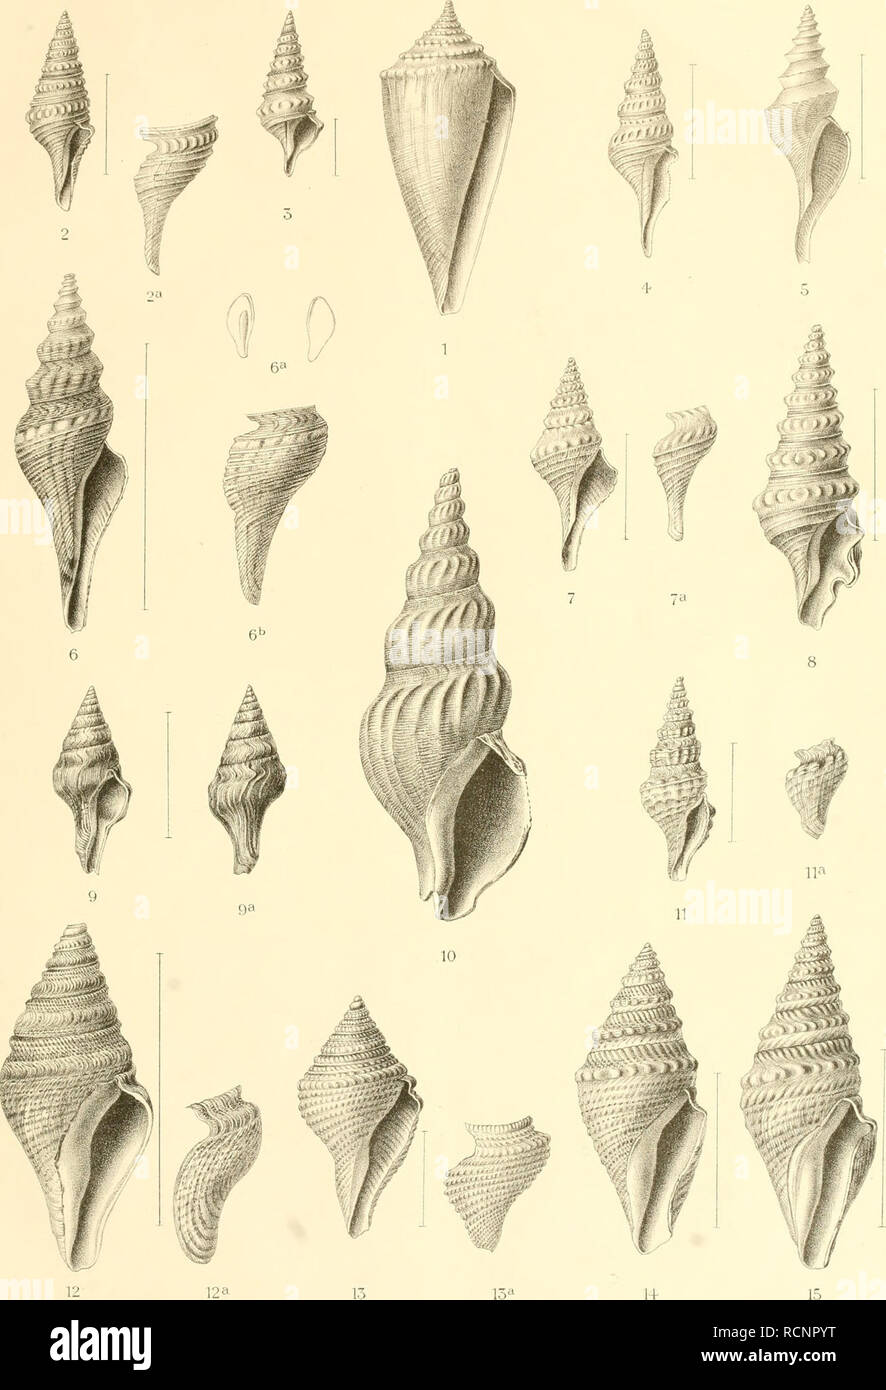 . Die beschalten Gasteropoden der deutschen Tiefsee-Expedition, 1898-1899. Gastropoda. DEUTSCHE TIEFSEE-EXPEDITION 1898-99. Bd. 11. v. MARTENS : BESCHAITE GASTROPÜDEN TAF.I.. .- y ^j.ir^icpj. &gt;jiz Tflf 7 ^!th .-.r::t:'''.^'tr-st-itiuiUi: rraJunin'''J': 1. Conus torquatus. — 2. Pleurotoma gemmulina. — 3. PL rotatilis. — 4. Surcula exstructa. — 5. Leucosyrinx crispulata. — 6. Surcula circumstricta. — 7. Brachytoma subsuturalis. — 8. Drillia bisinuata. — 9. Clavatula subspirata. 10. Pontothatima Chuni. — 11. Drillia sesquitertia. — 12. Genota atractoides. — 13. G. bitorquata. — 14. G. fissa.  Stock Photo